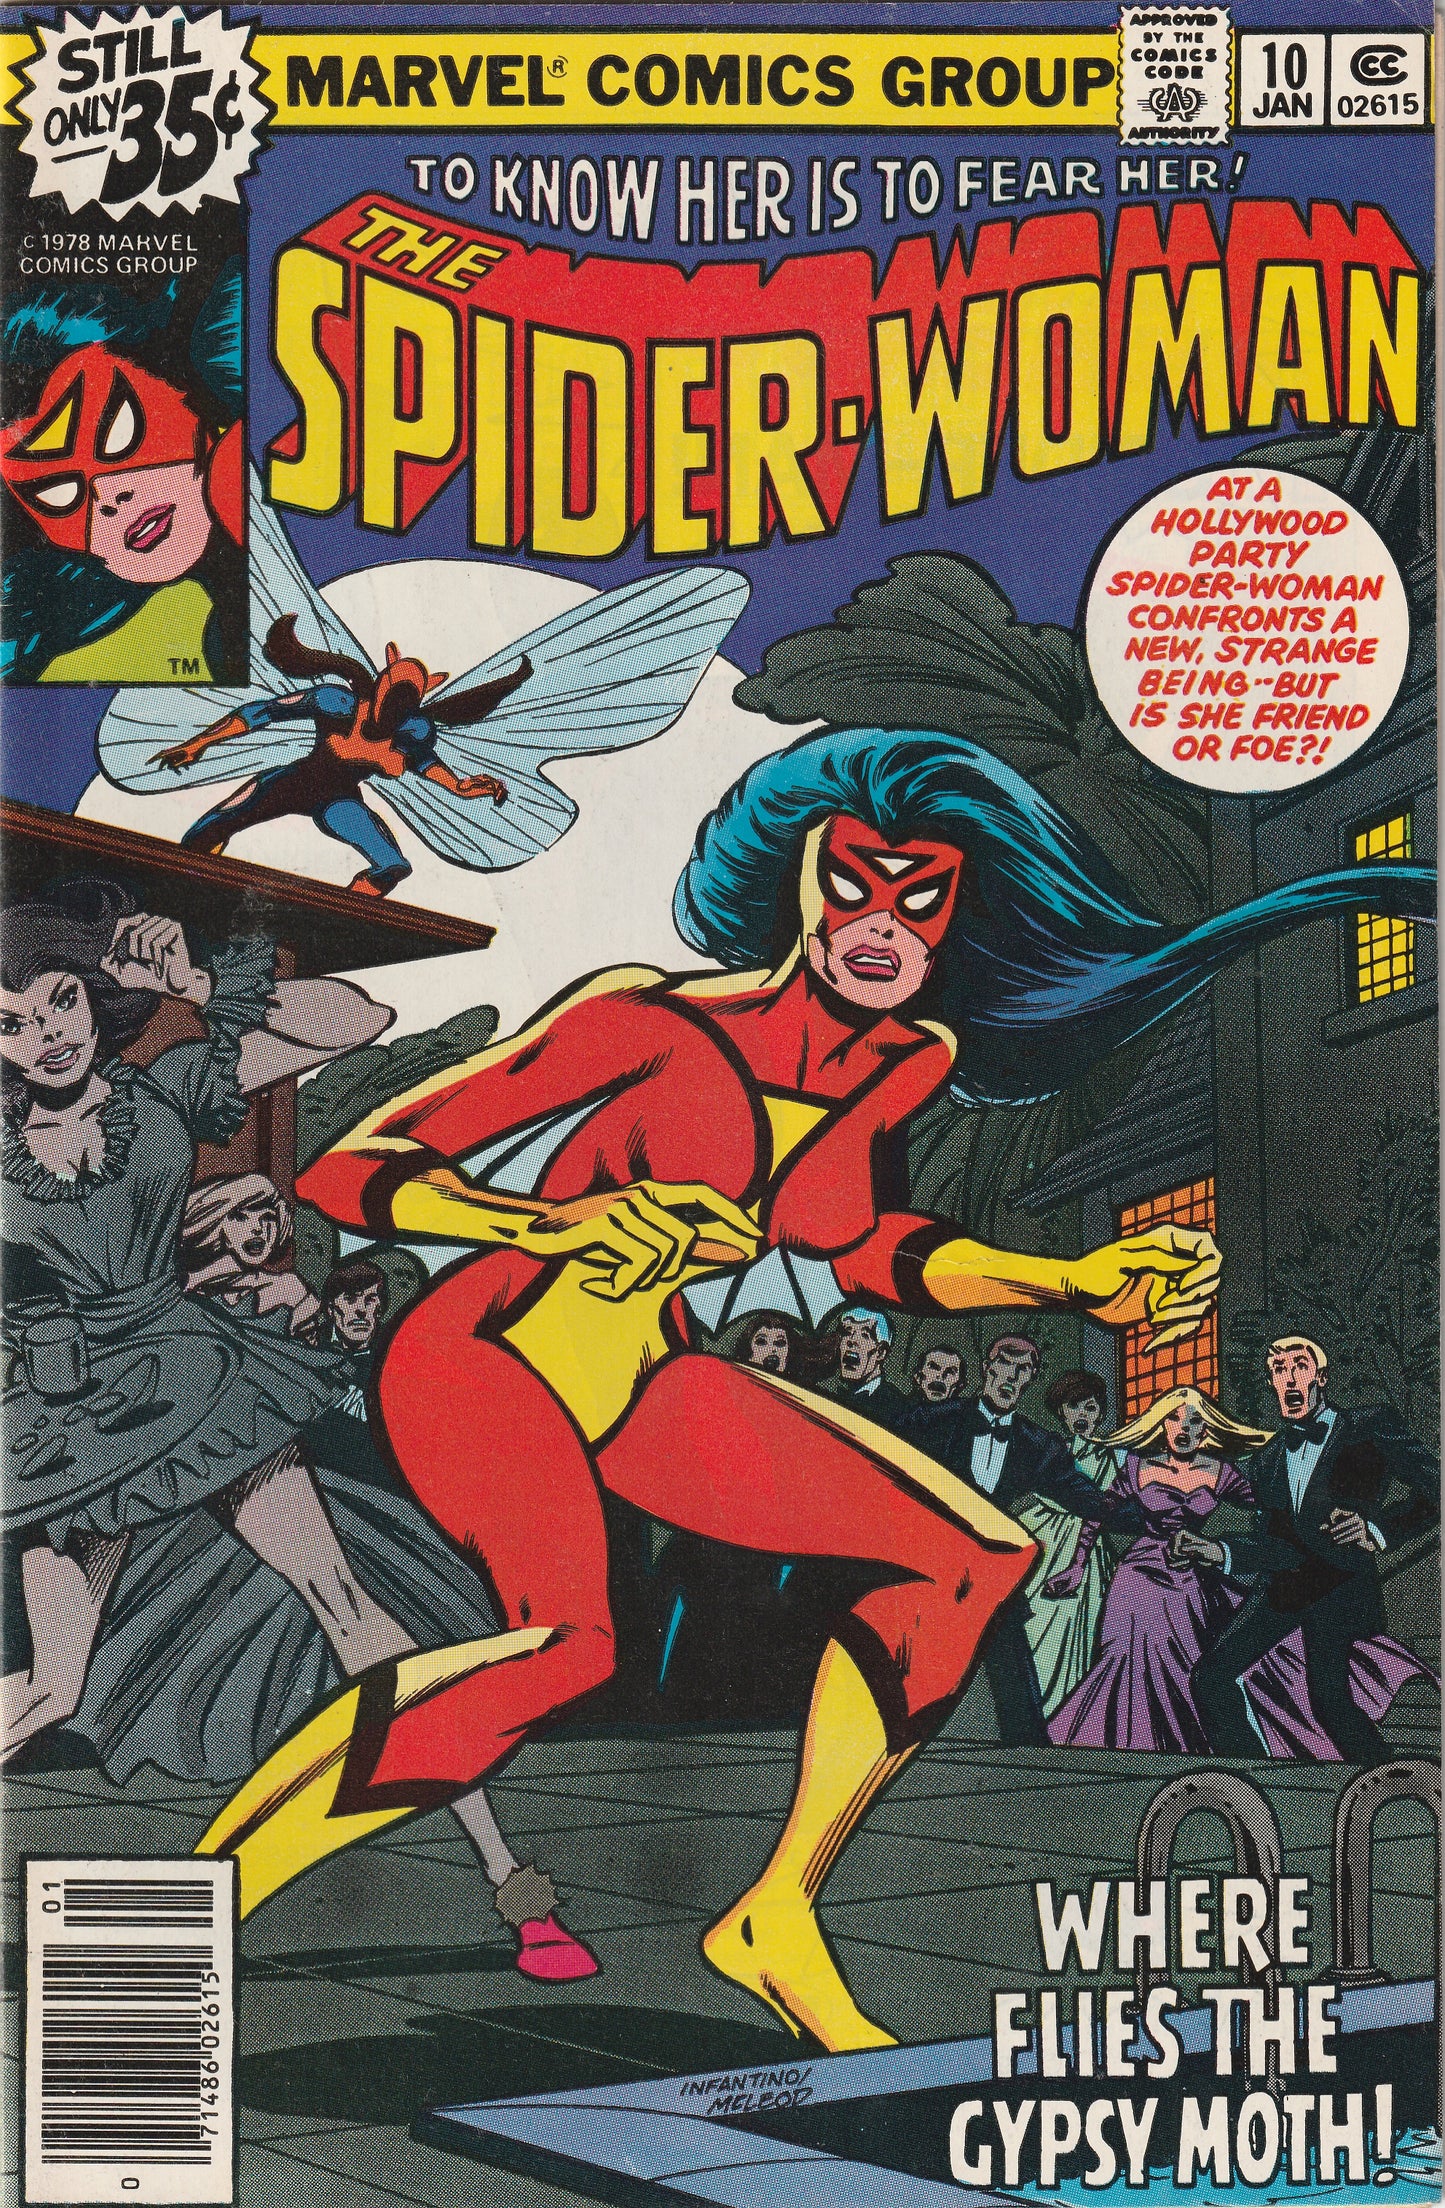 Spider-Woman #10 (1979) - 1st Appearance of Gypsy Moth (Sybil Dvorak)